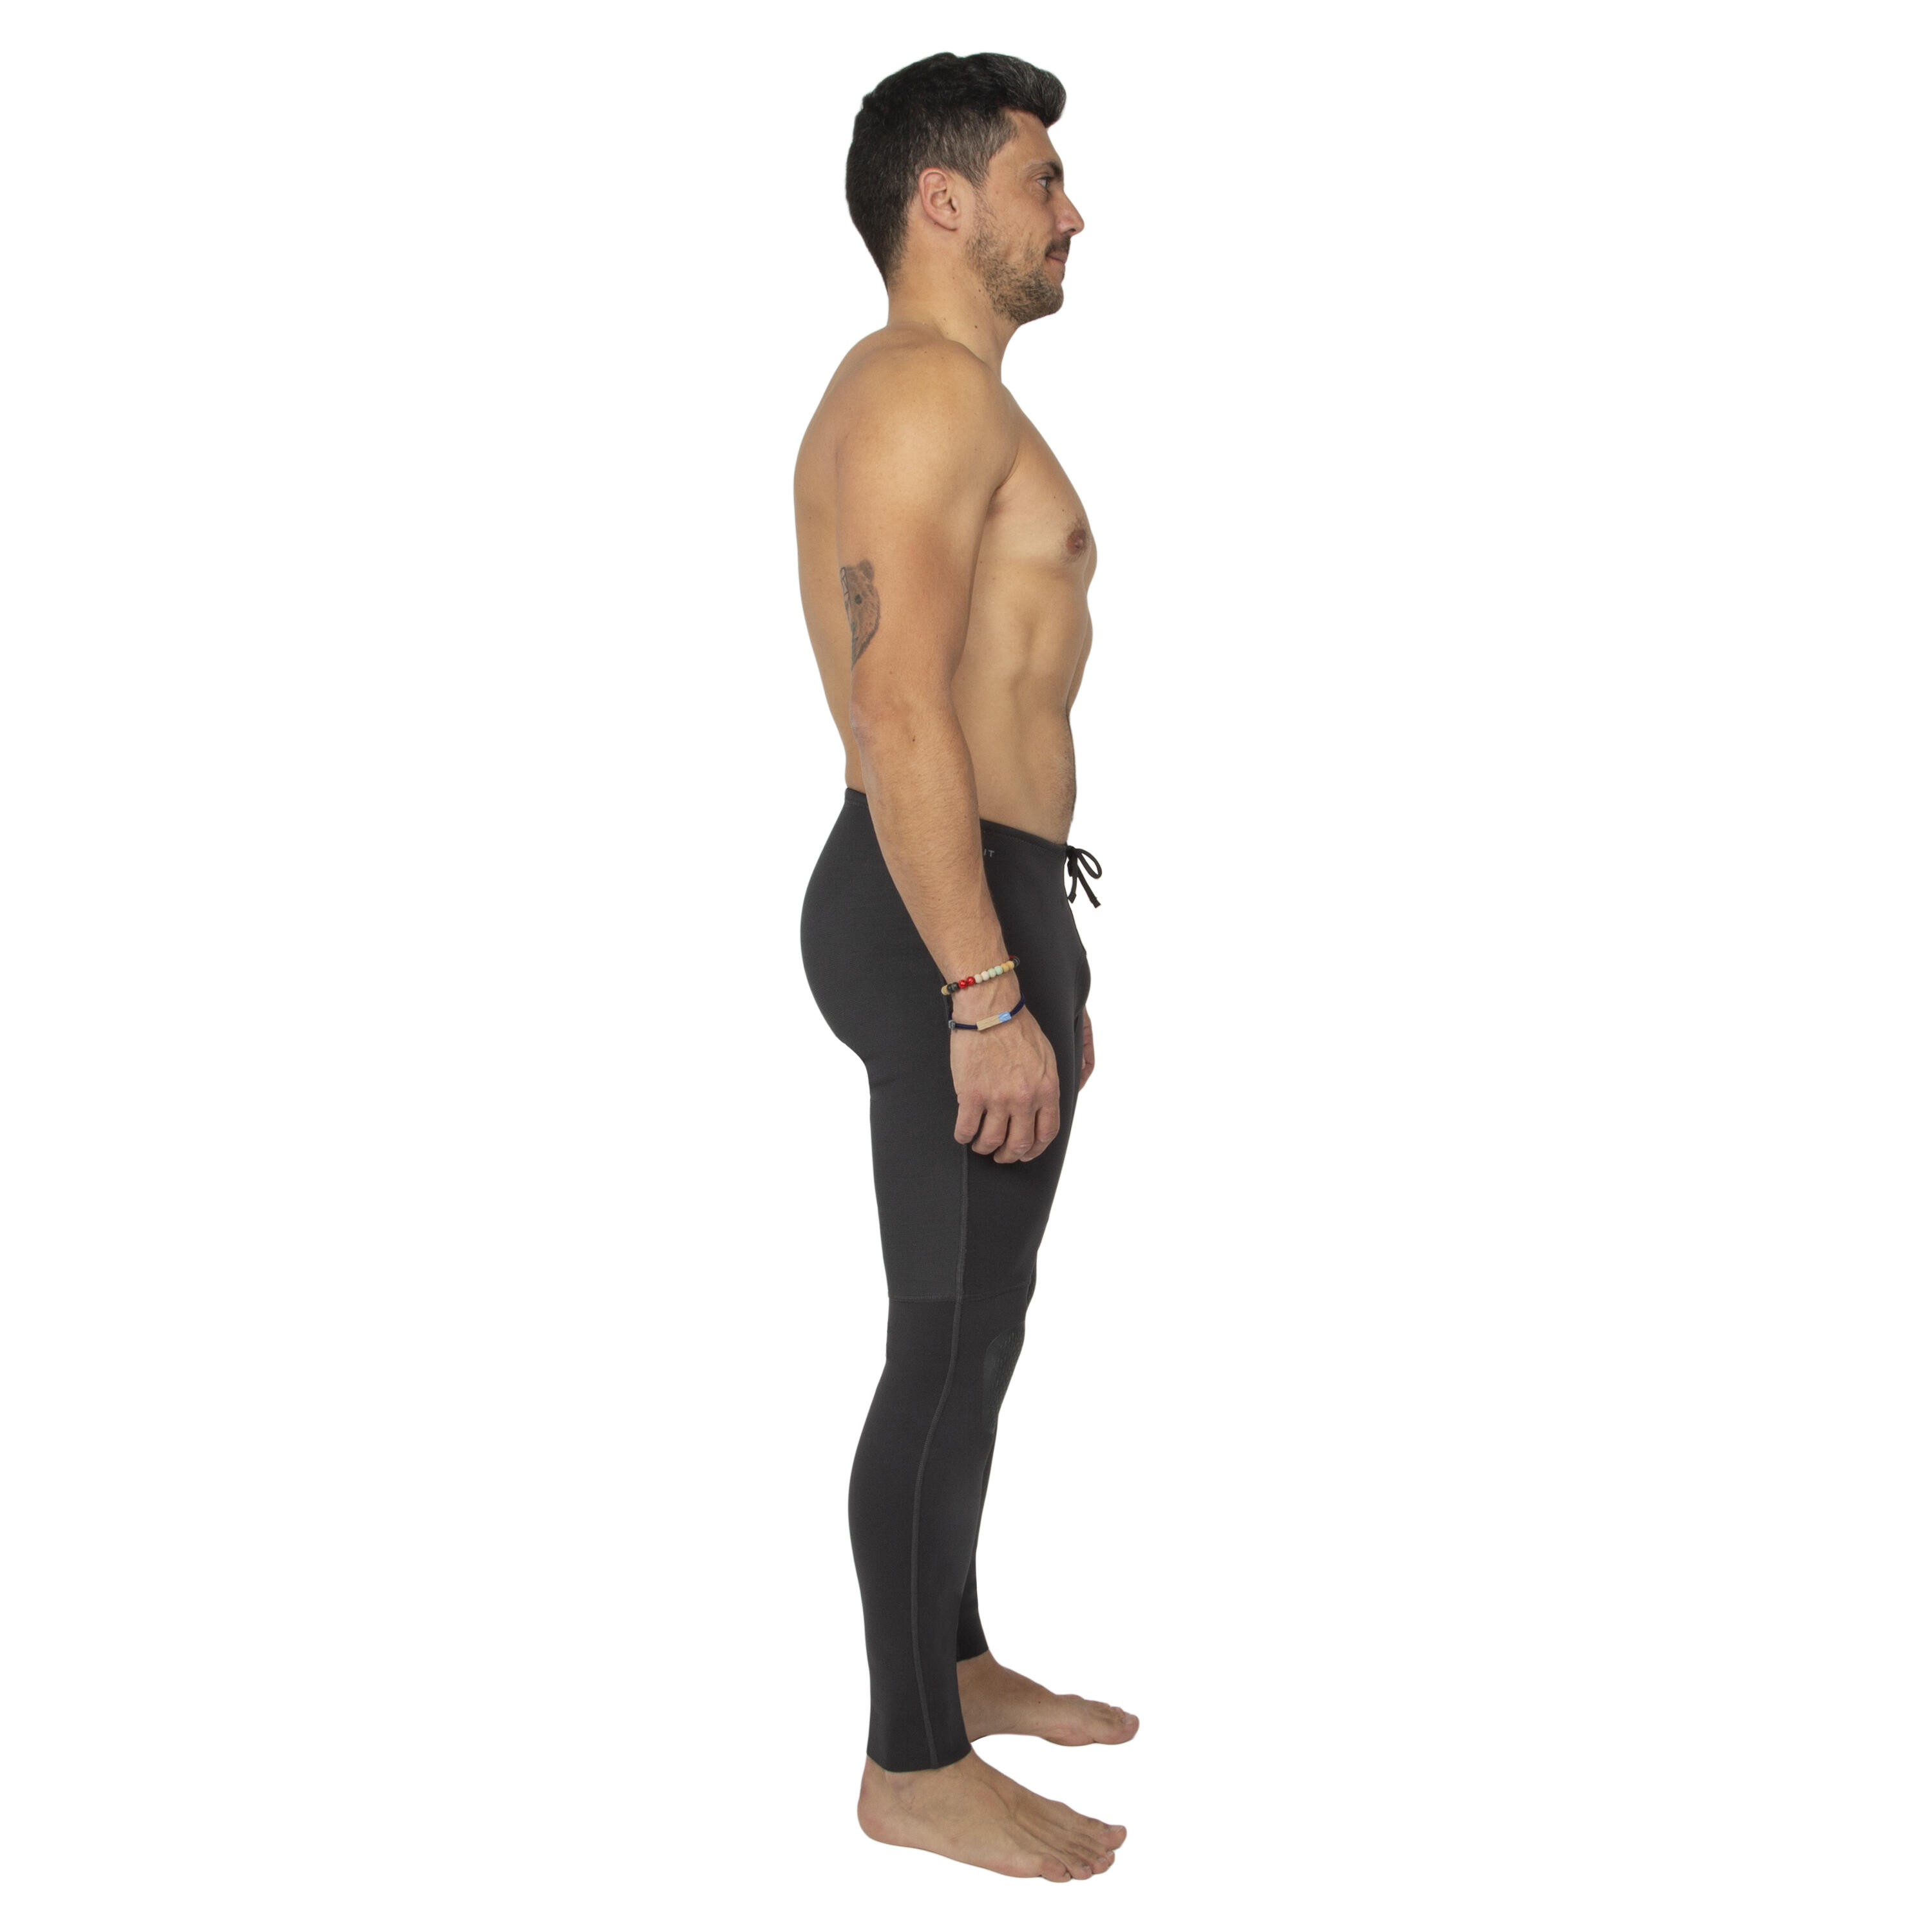 Men's Neoprene Paddle Sports Pants - Dark grey - Itiwit - Decathlon